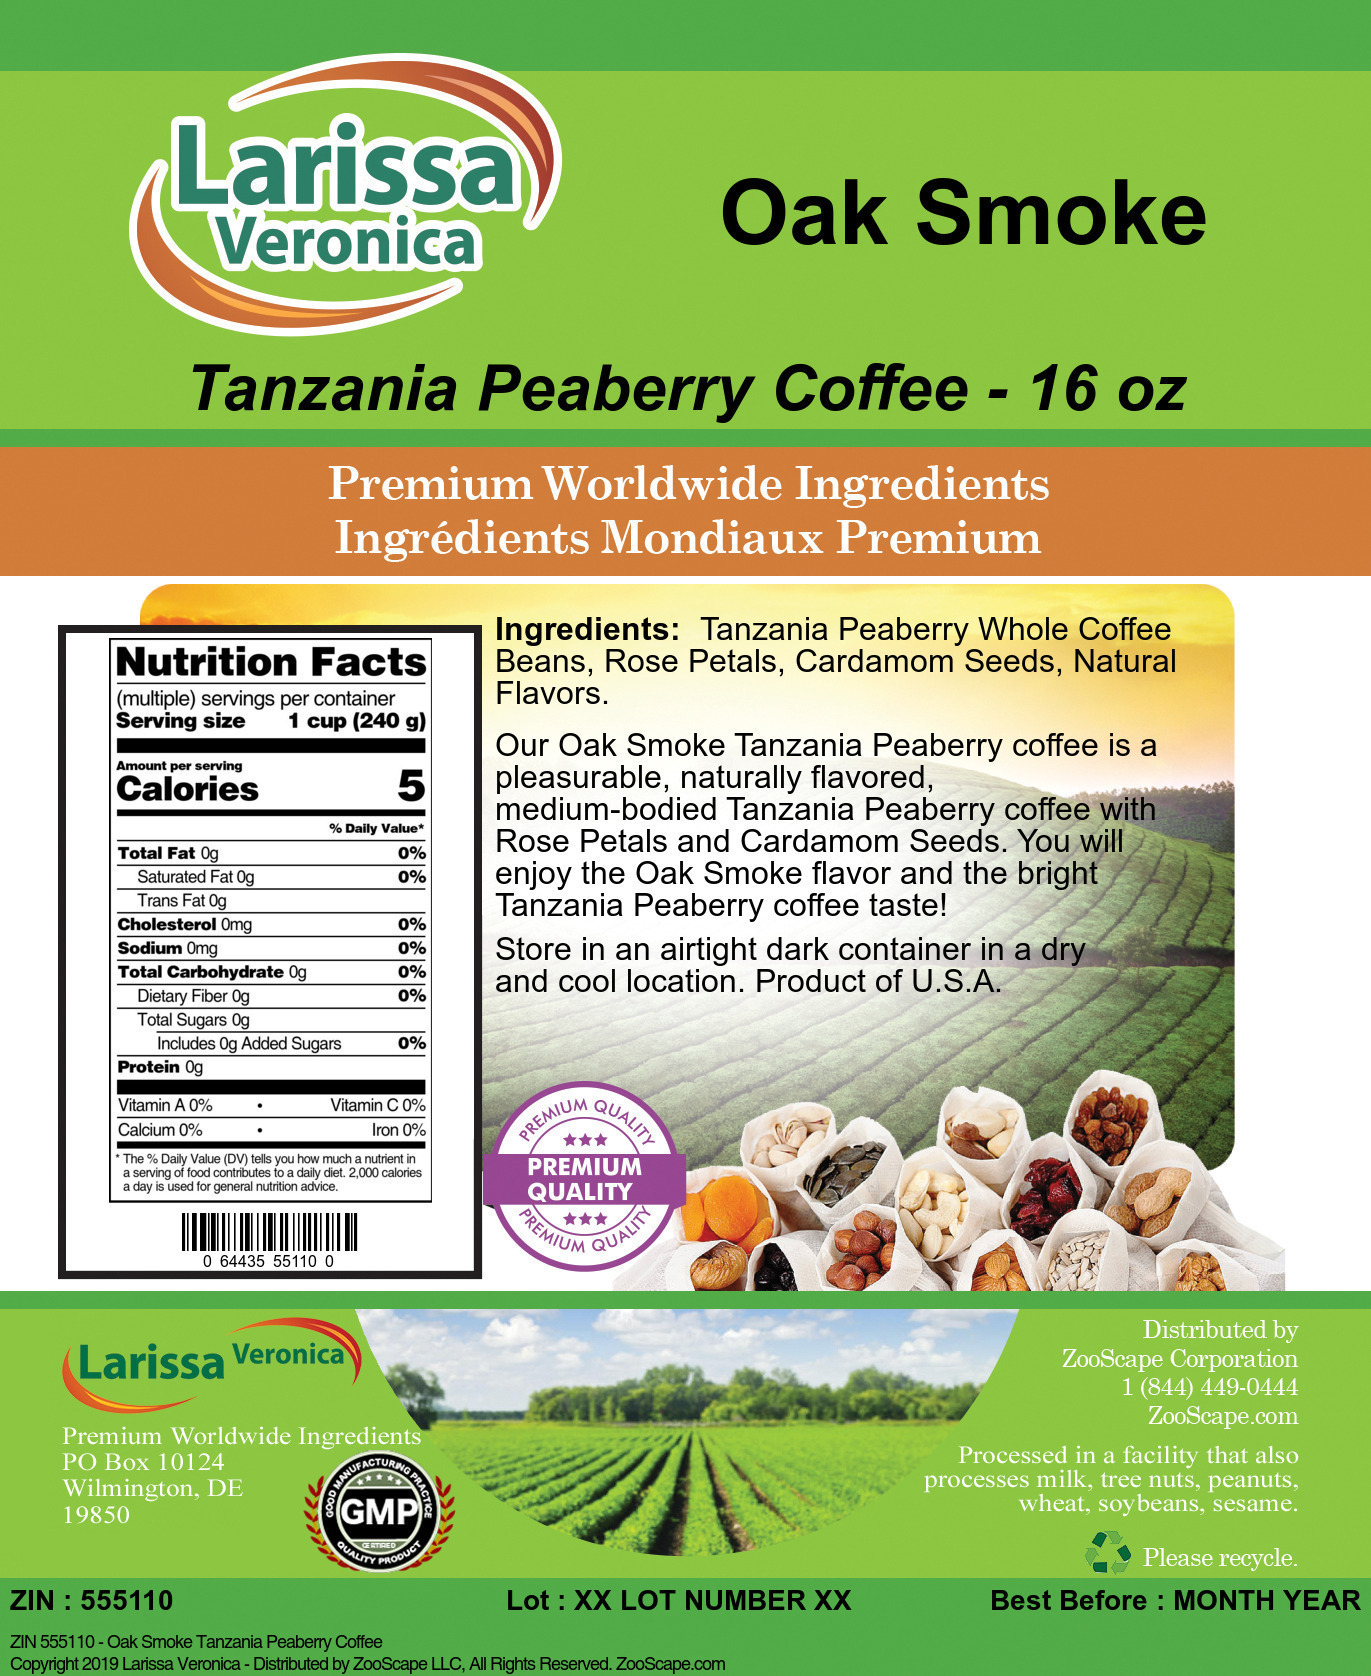 Oak Smoke Tanzania Peaberry Coffee - Label